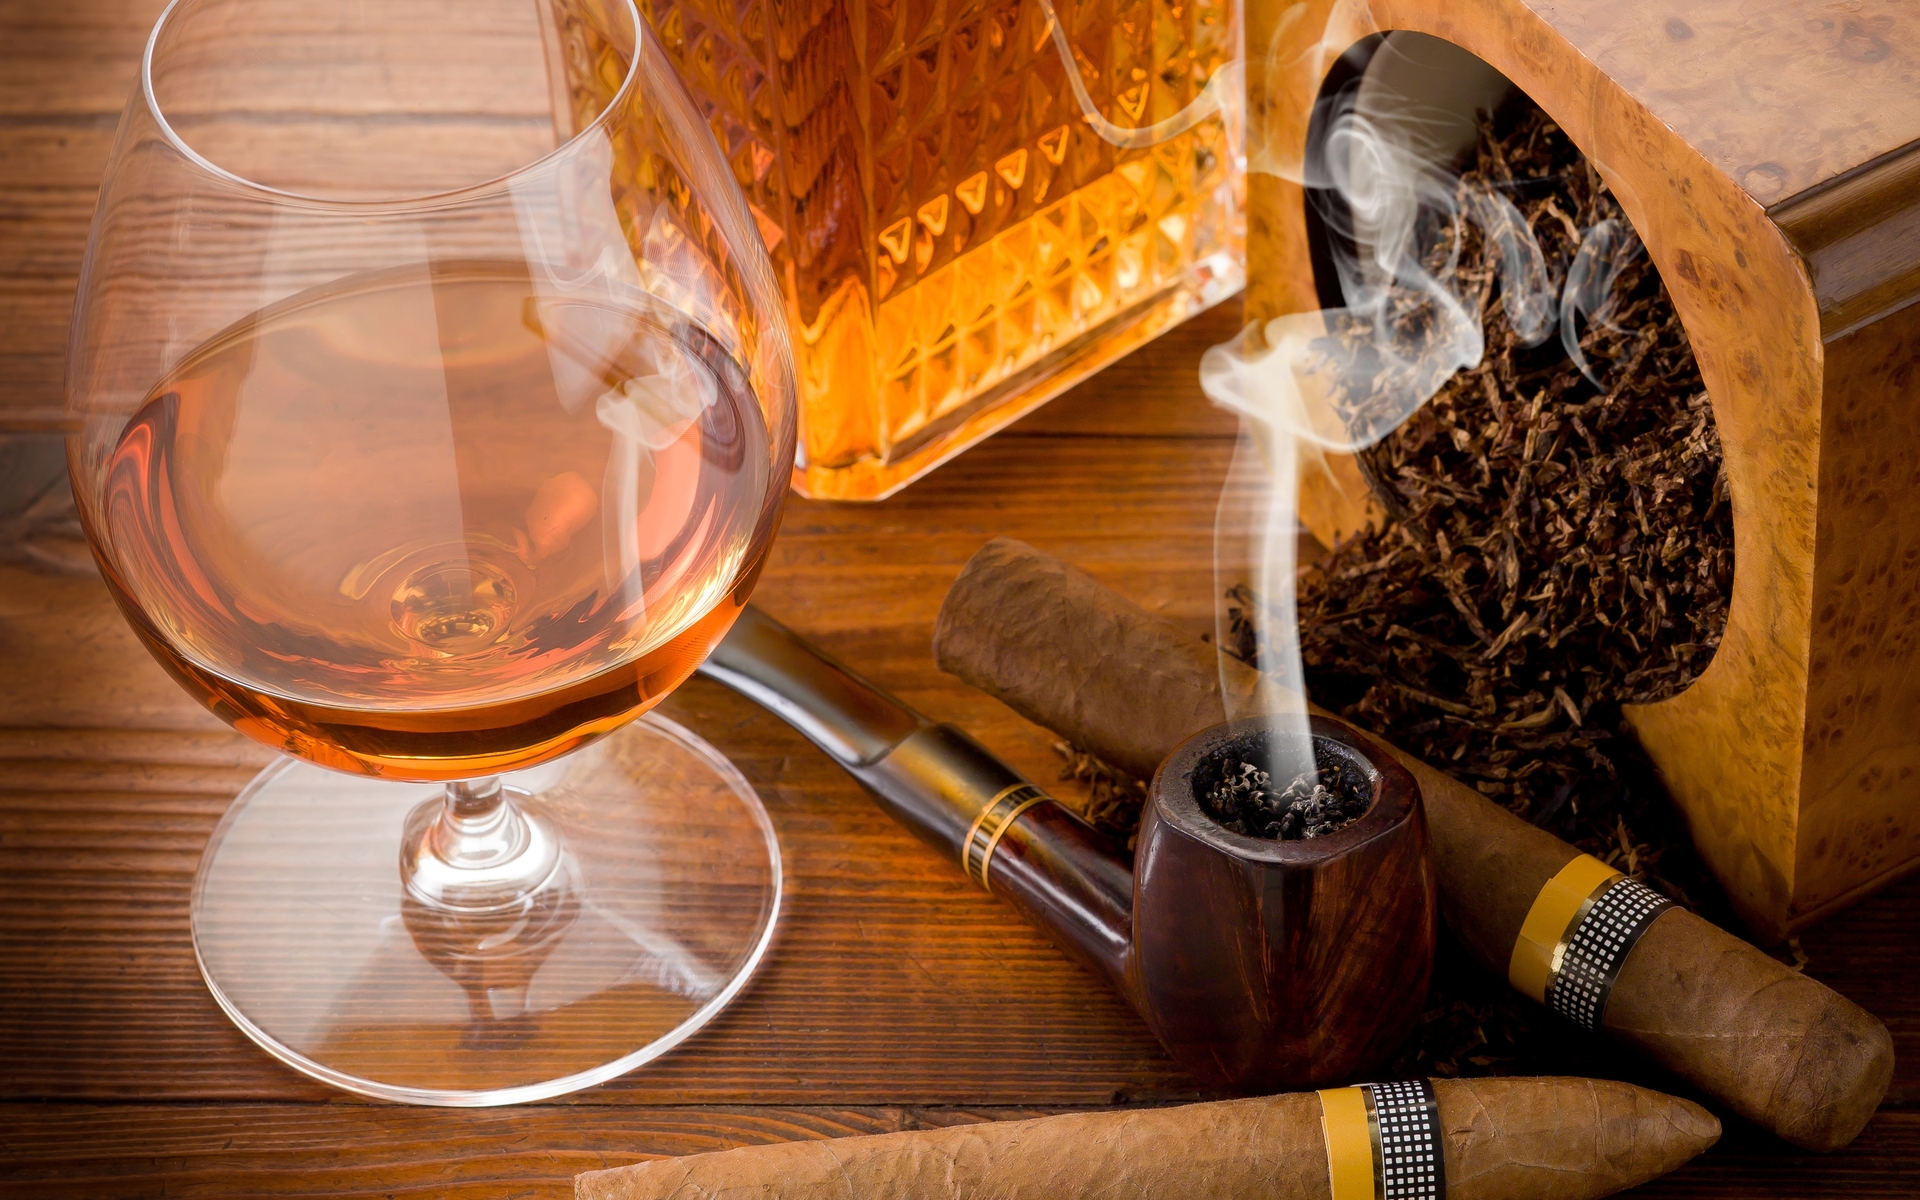 food, whisky, brandy, cigar, glass, smoking pipe, table